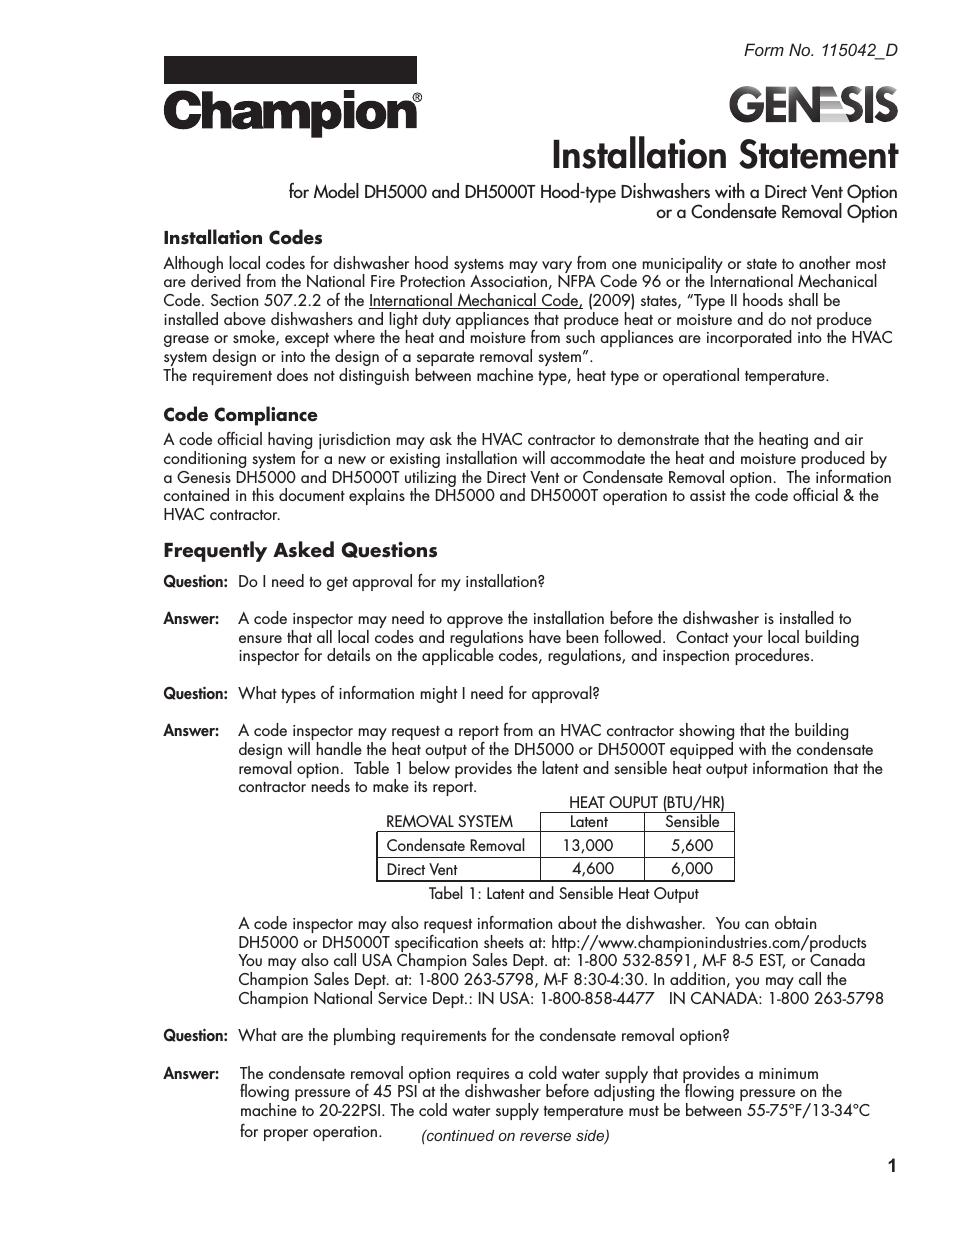 DH5000T Single Source Gas Installation Statement